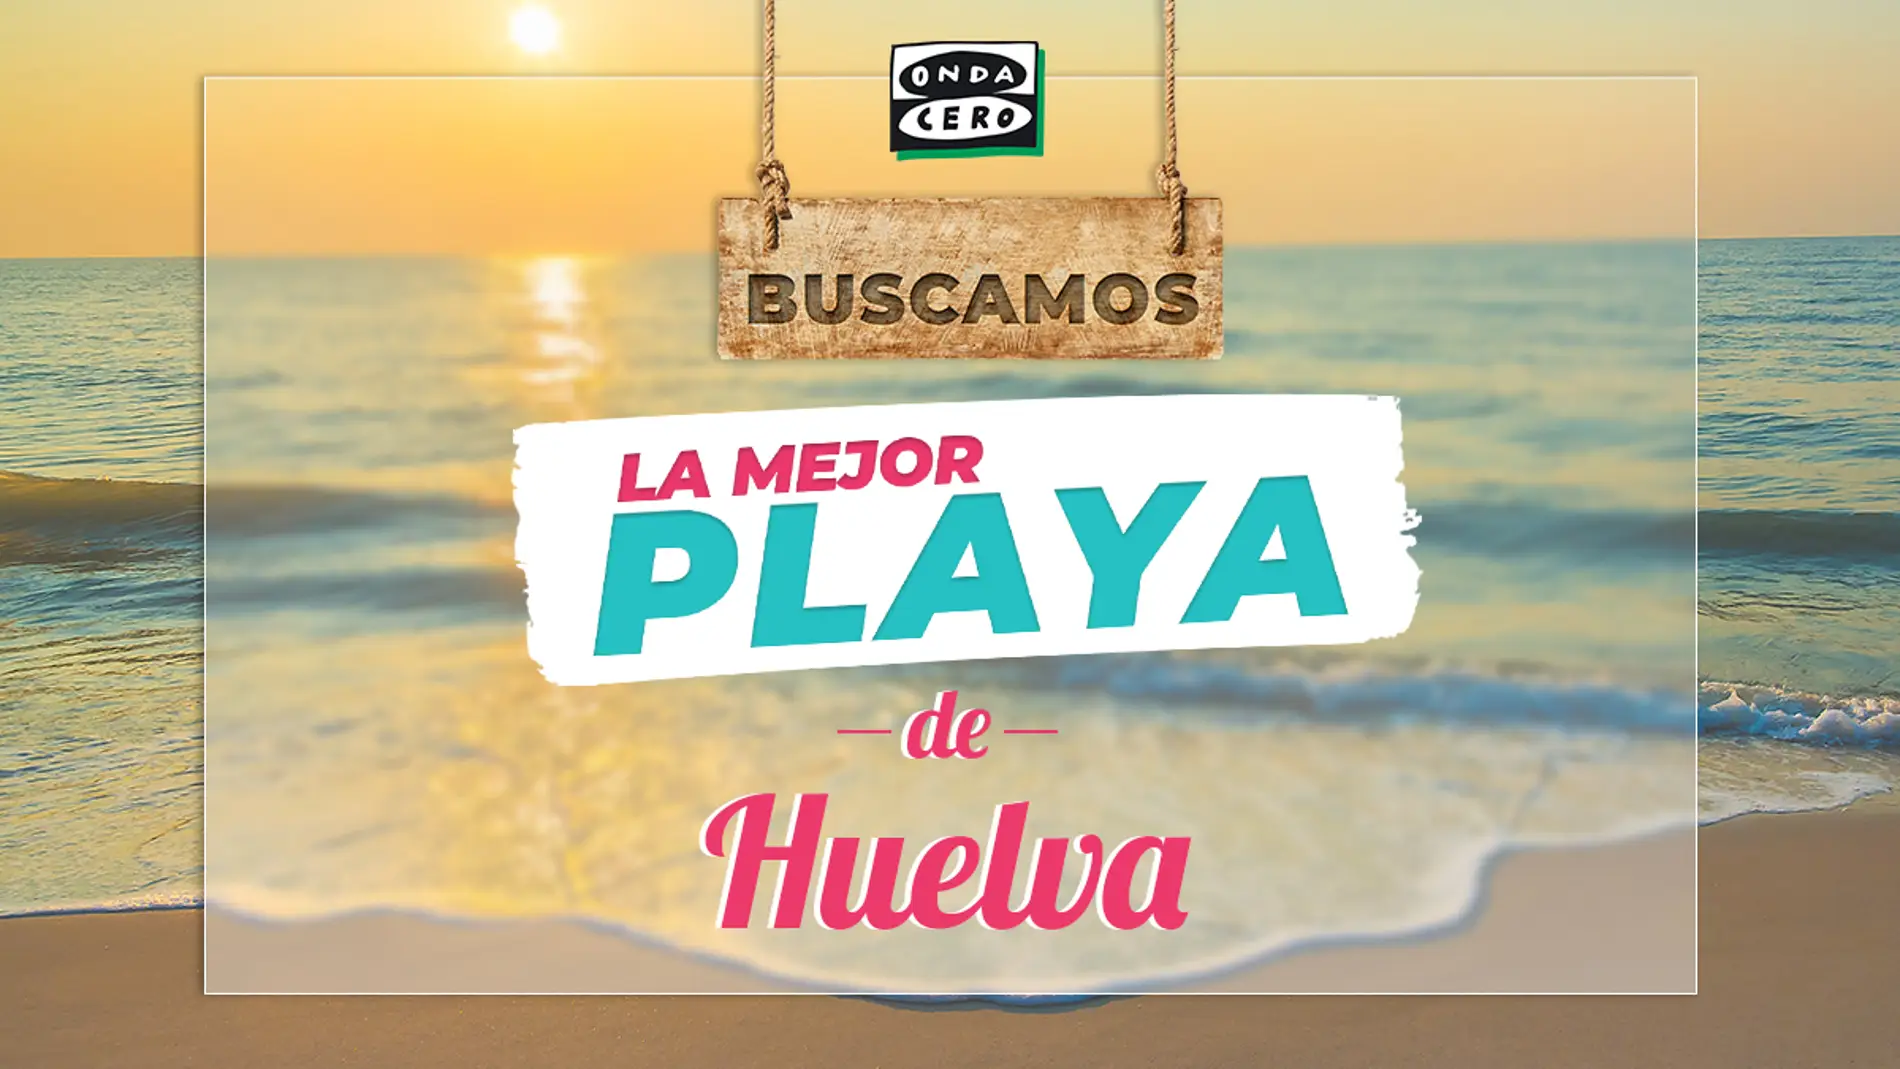 La Mejor Playa de Huelva